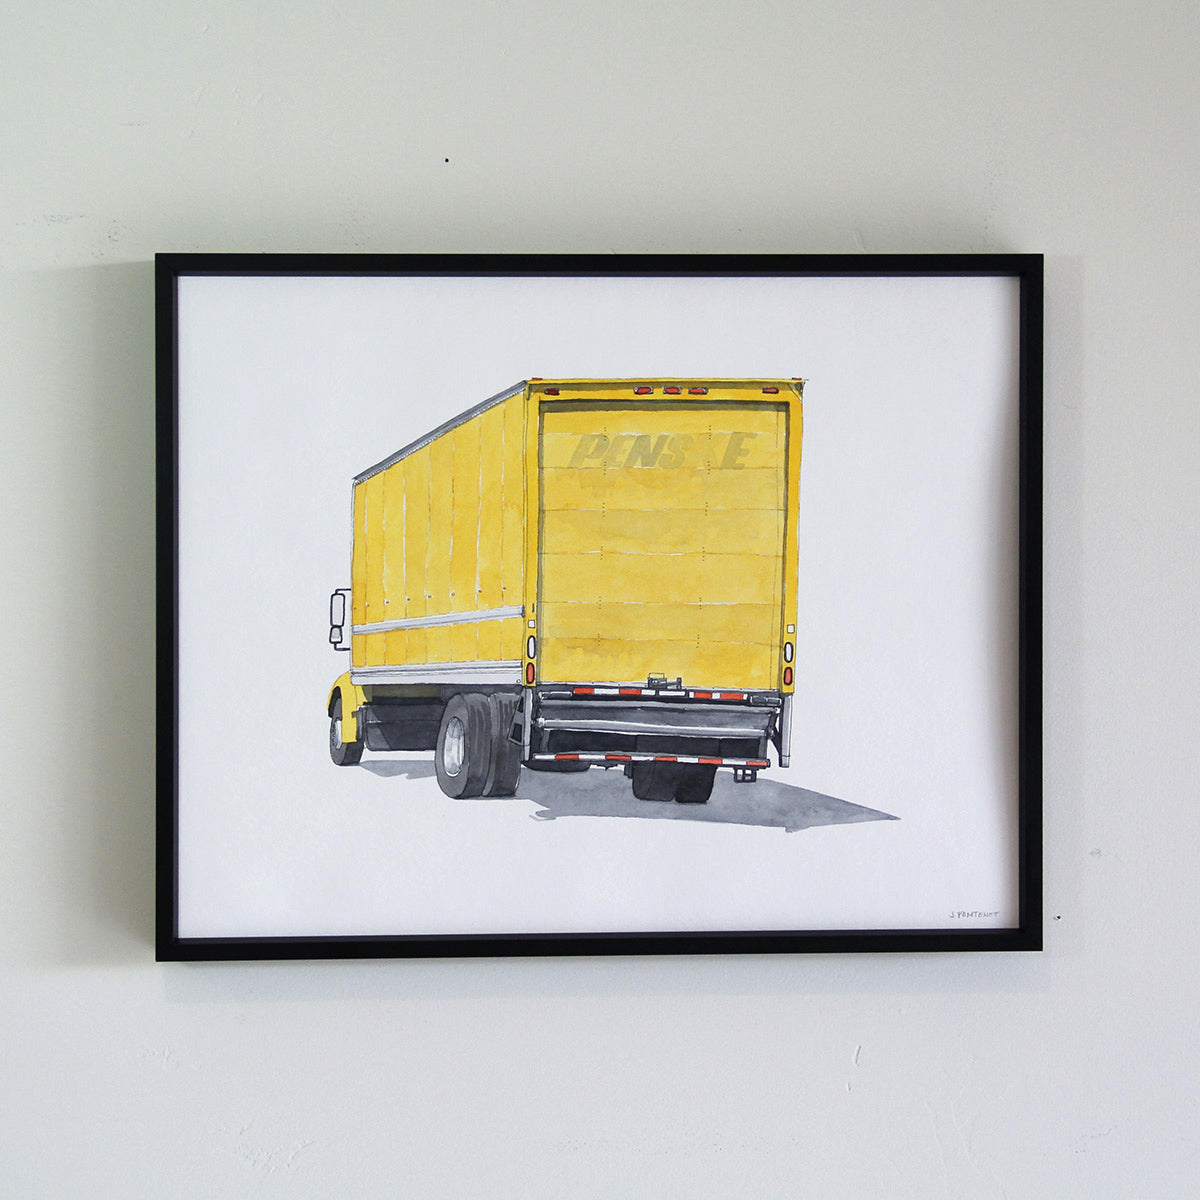 Truck 12 Penske - Original Art